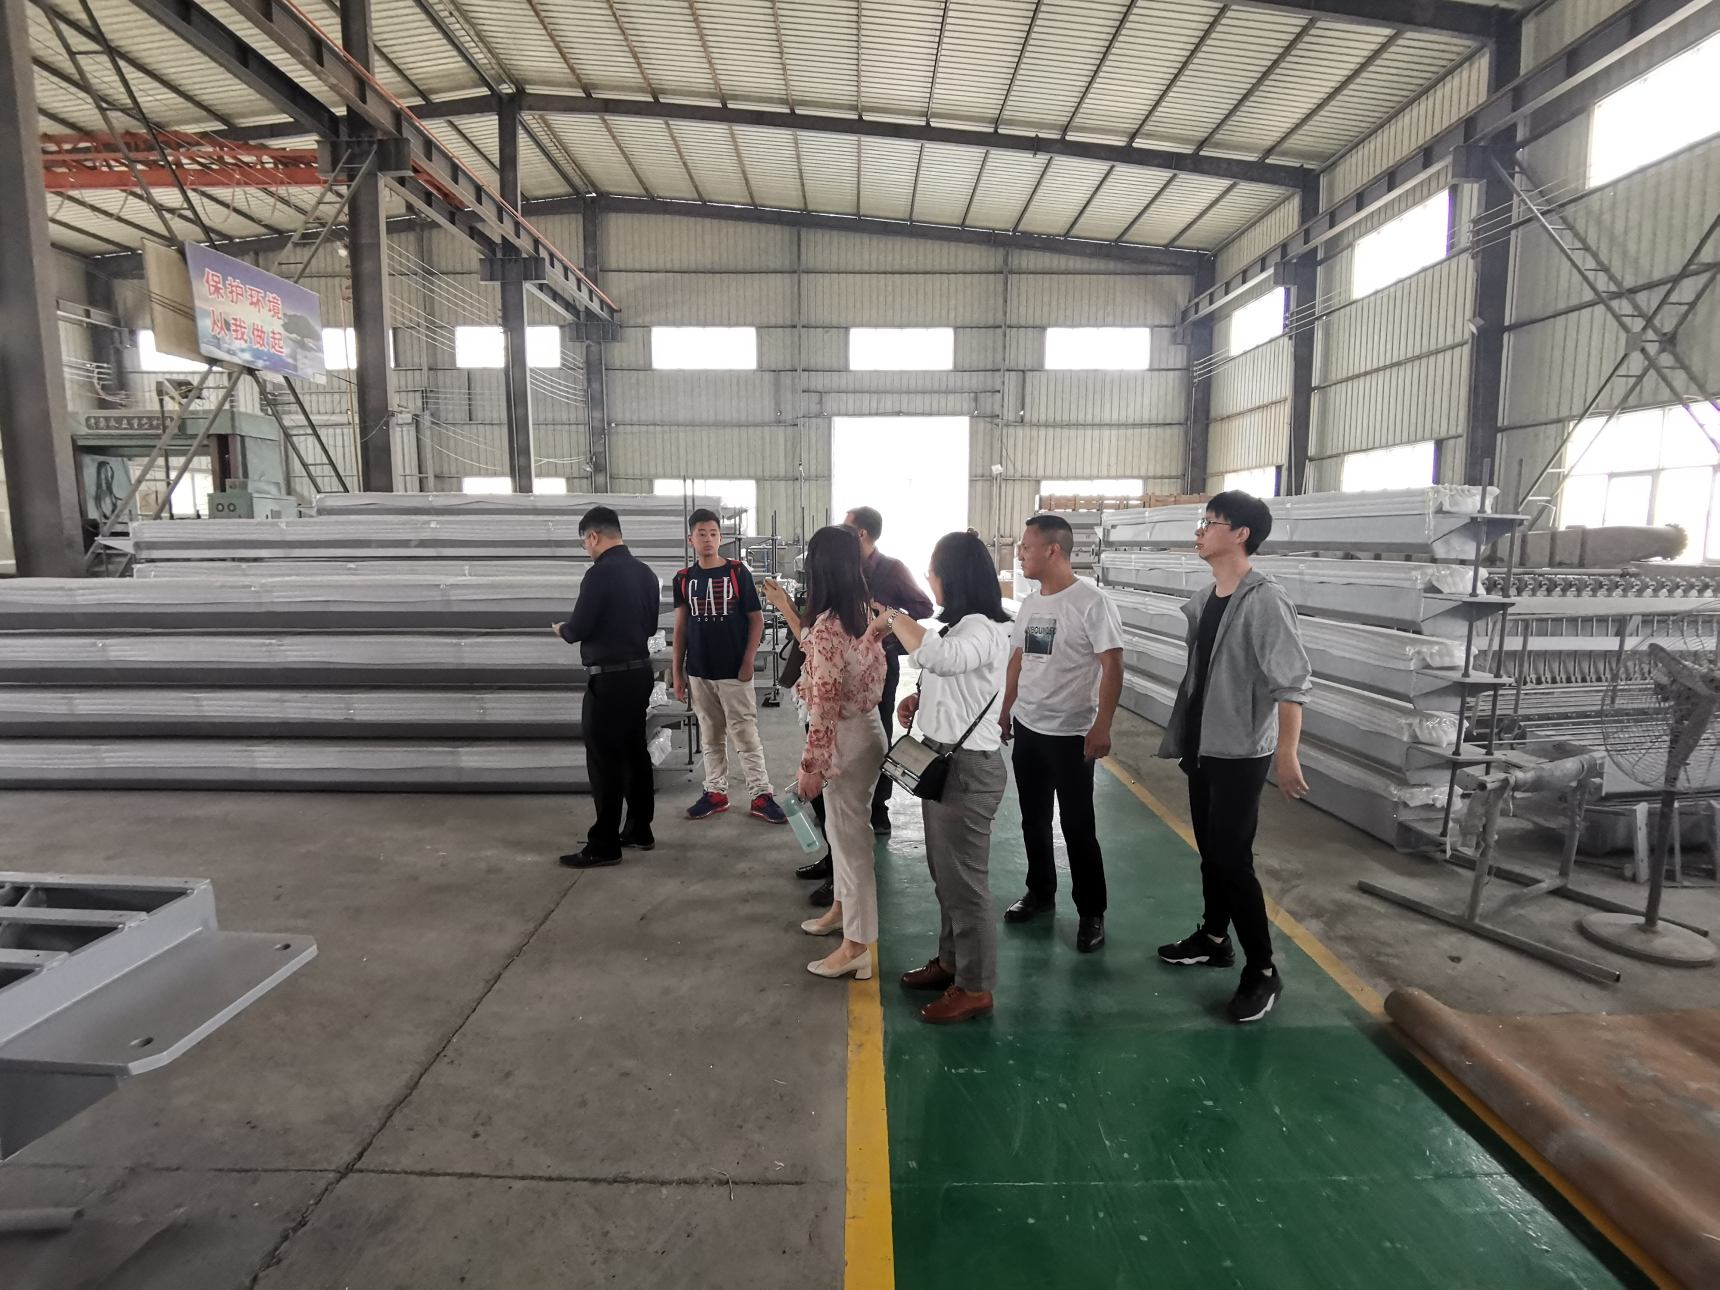 Qinyang Aotian jumbo blind press roll for paper machine pulping equipment